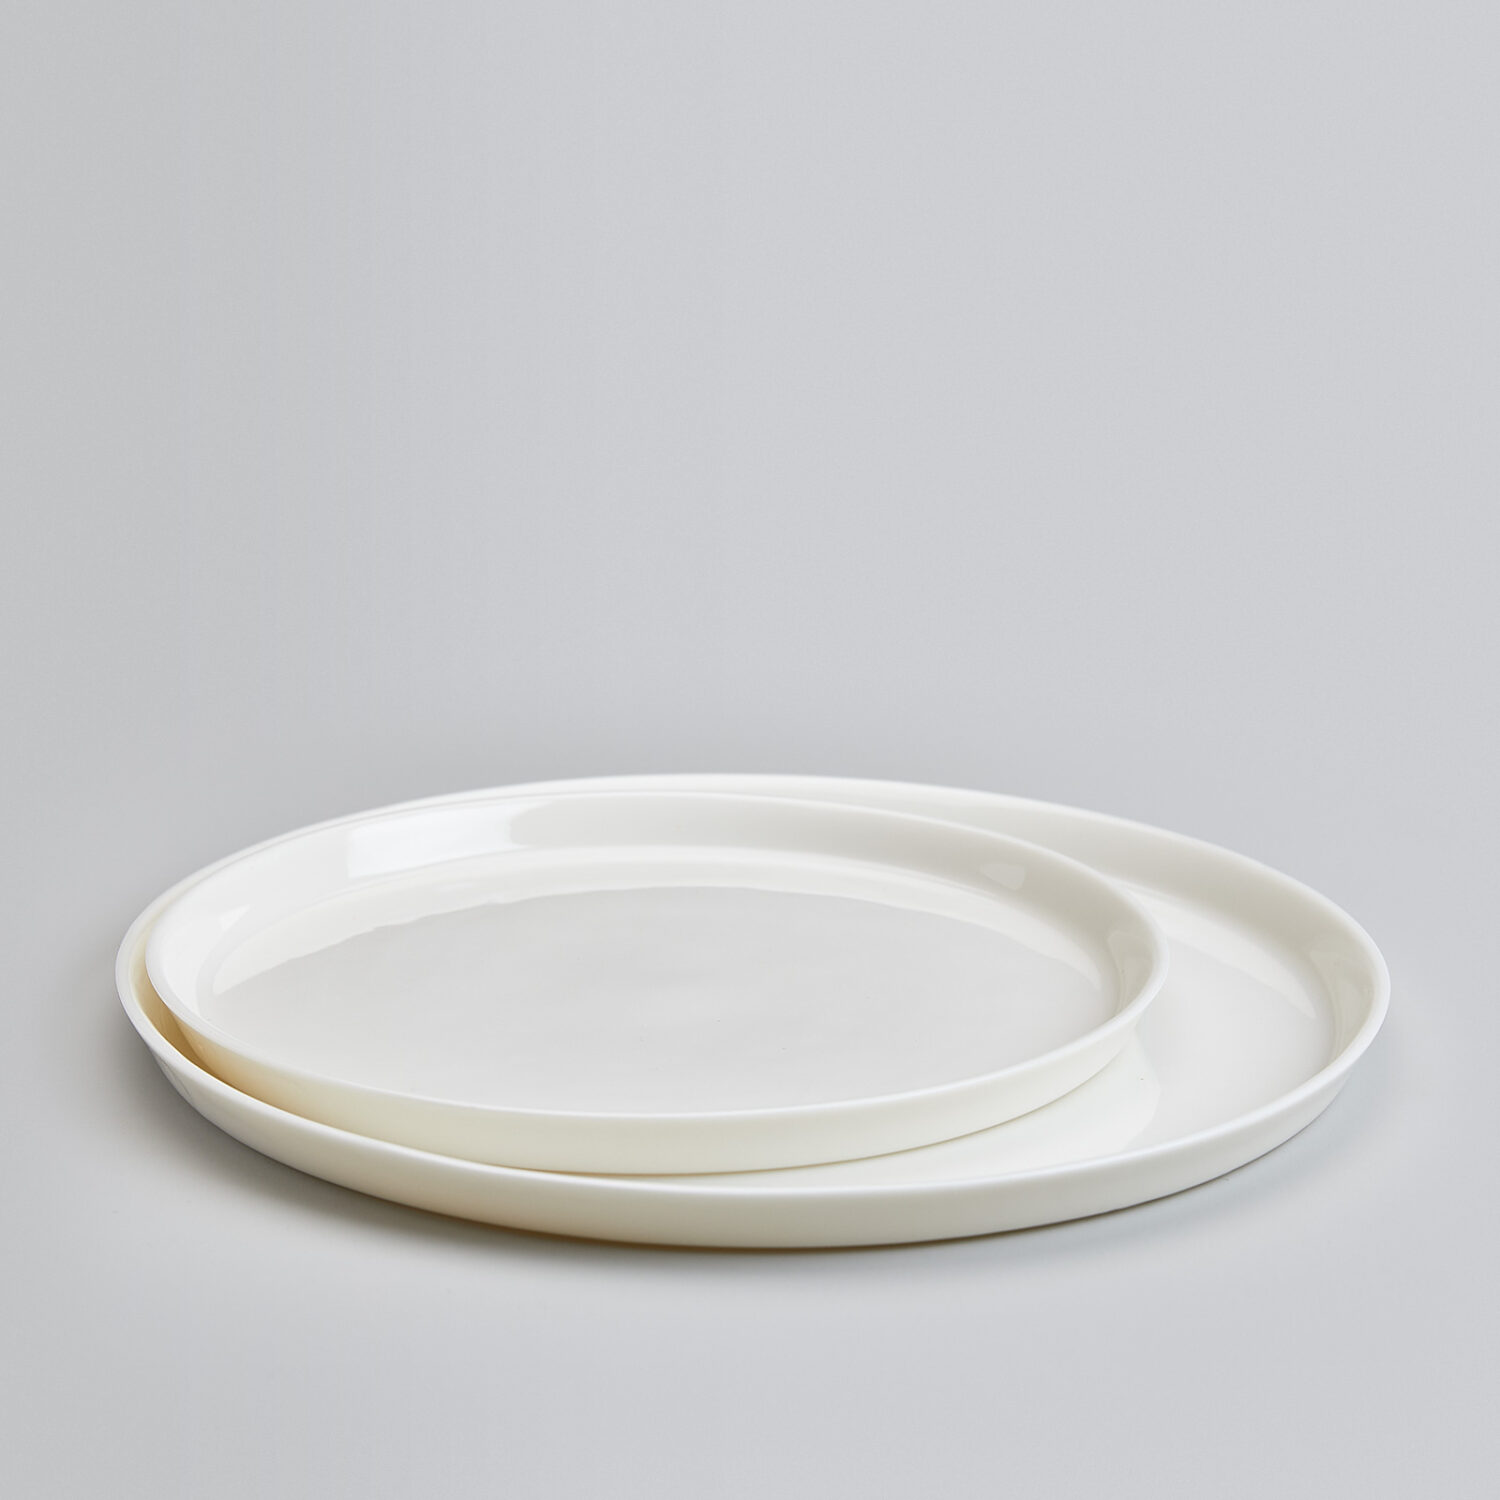 Handmade Porcelain Plate - Large